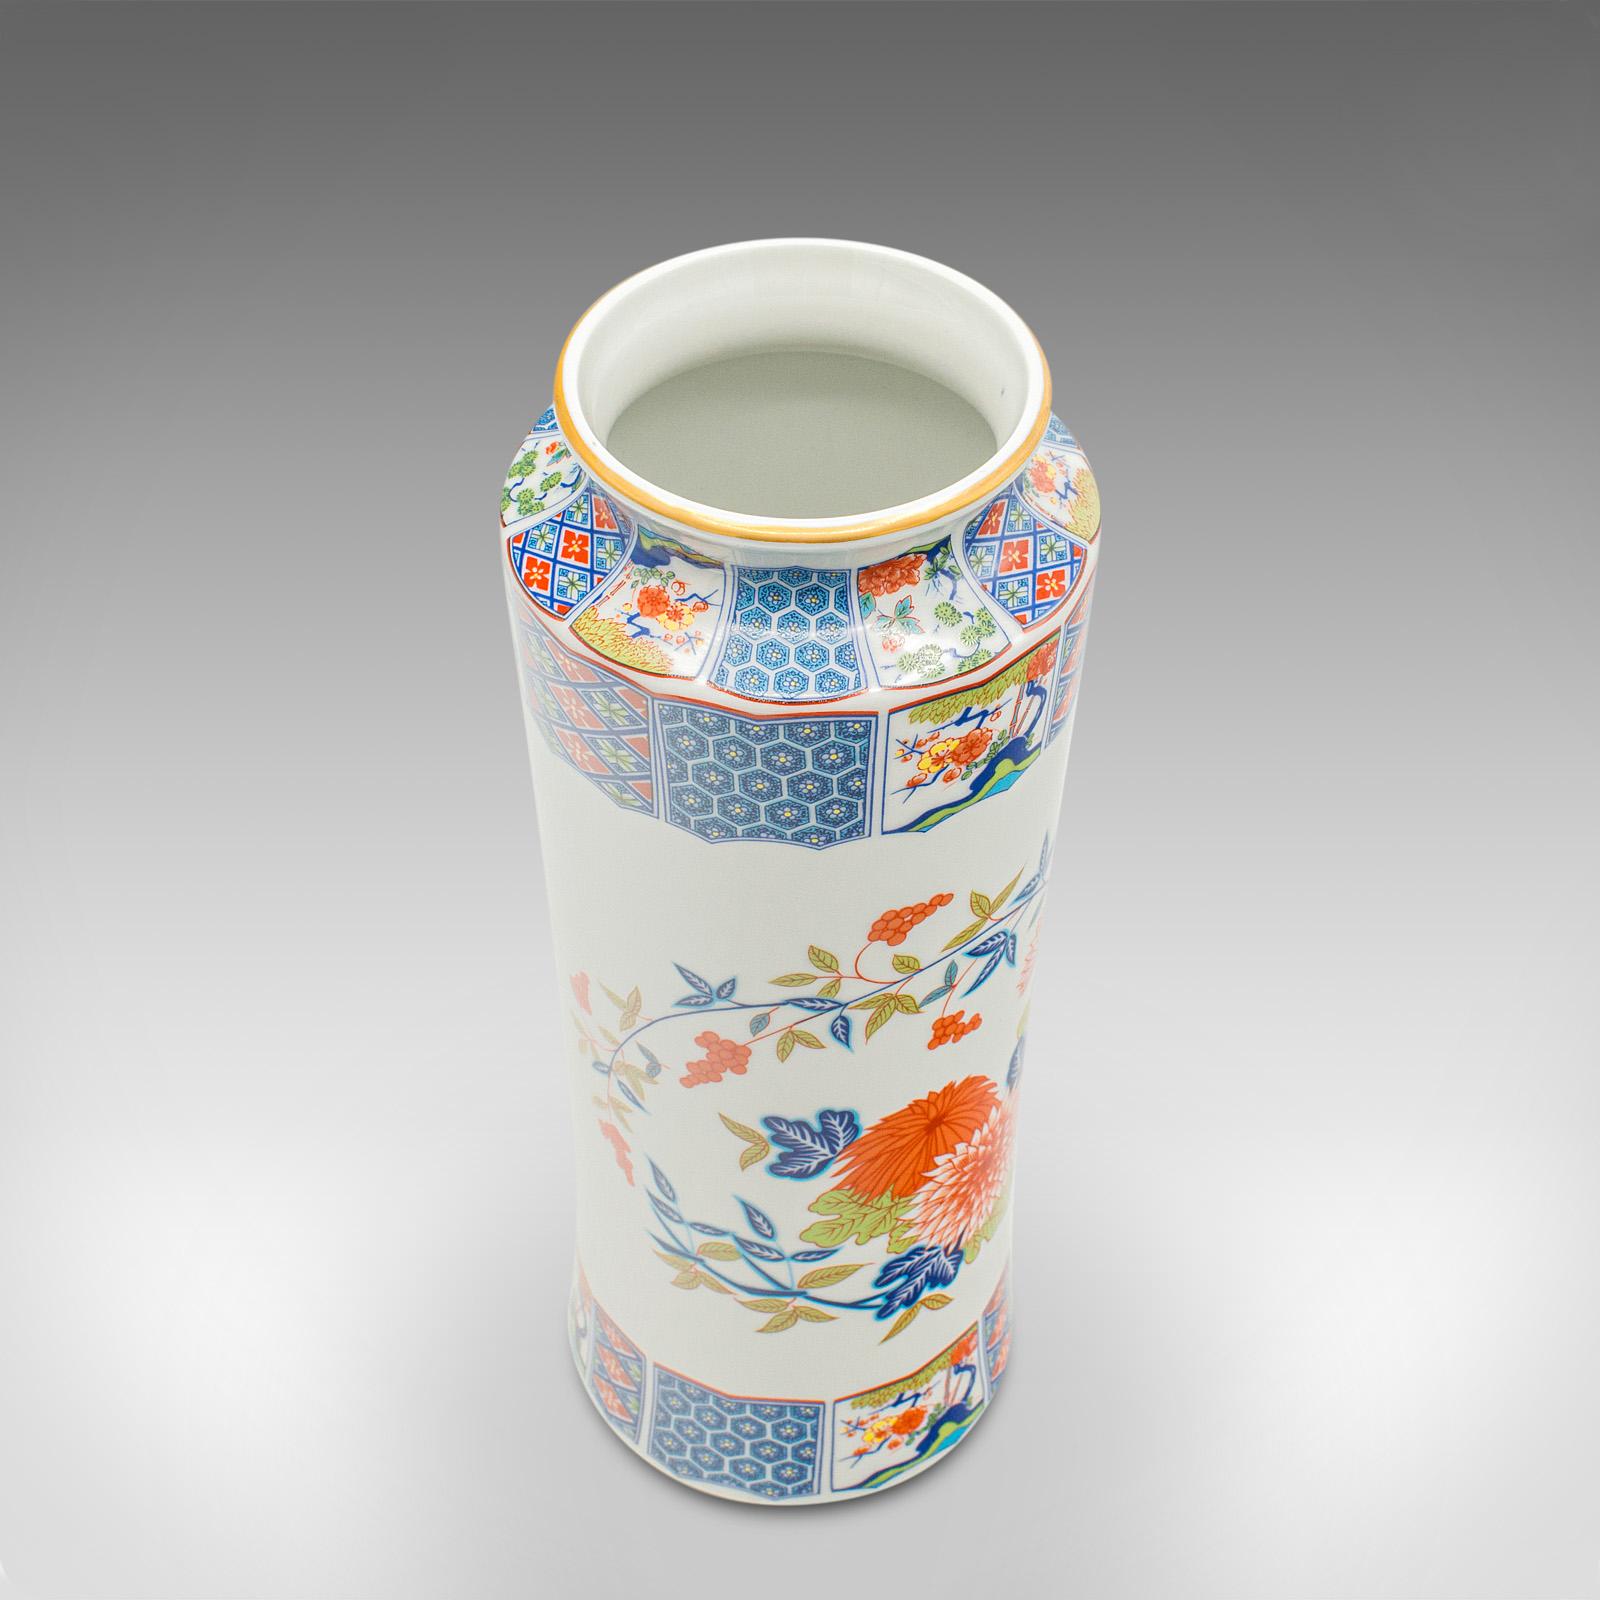 Vintage Decorative Stem Vase, Chinese, Ceramic, Flower Sleeve, Art Deco Revival For Sale 1